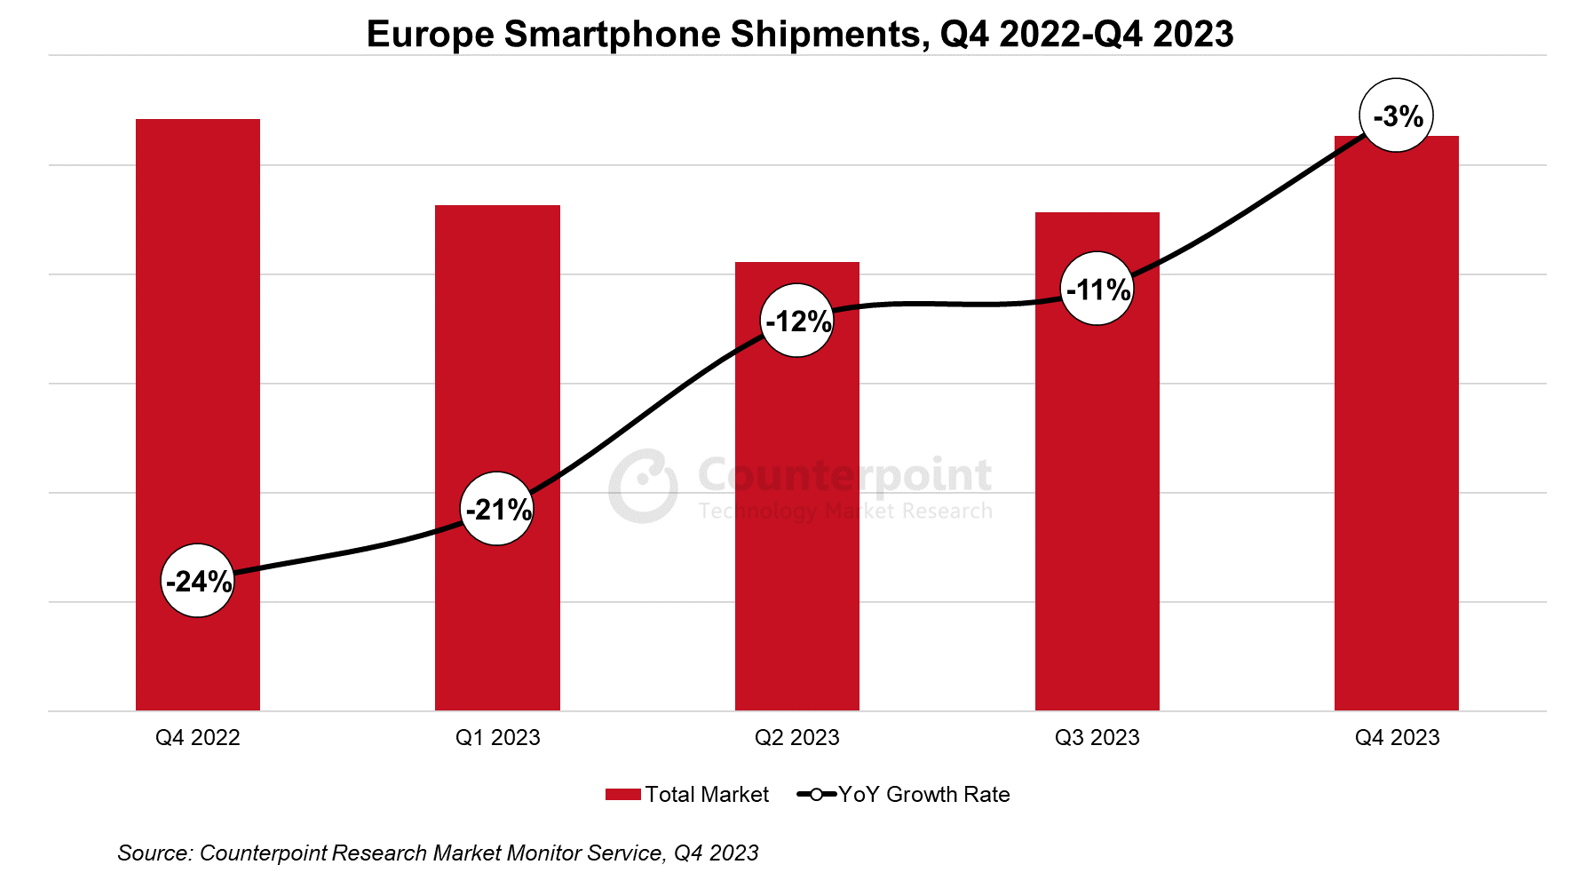 Europe Smartphone Shipments, Q4 2022 - Q4 2023